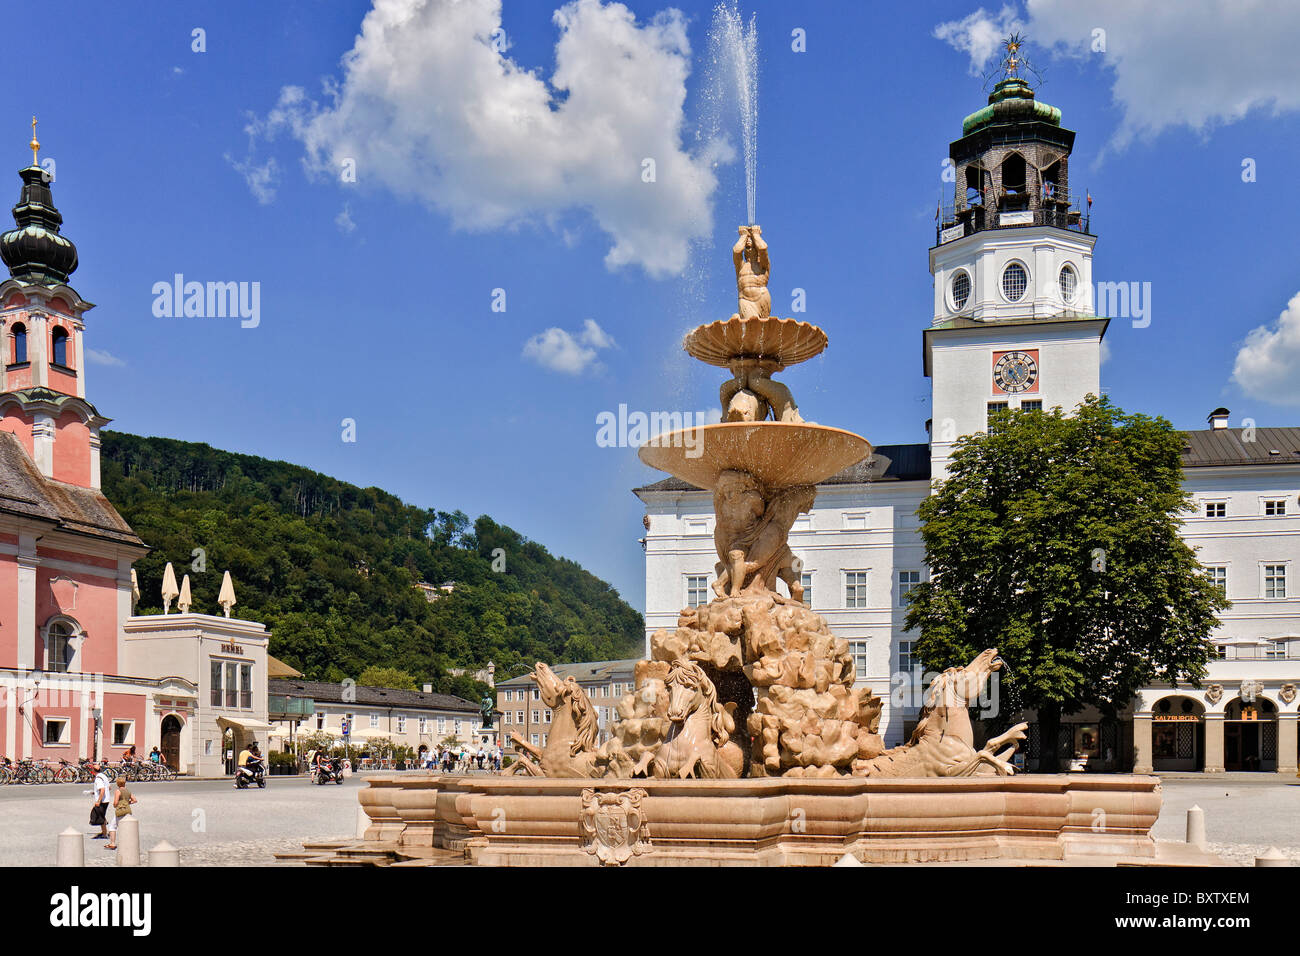 Austria Saltzberg Glockenspiel Clock Stock Photo